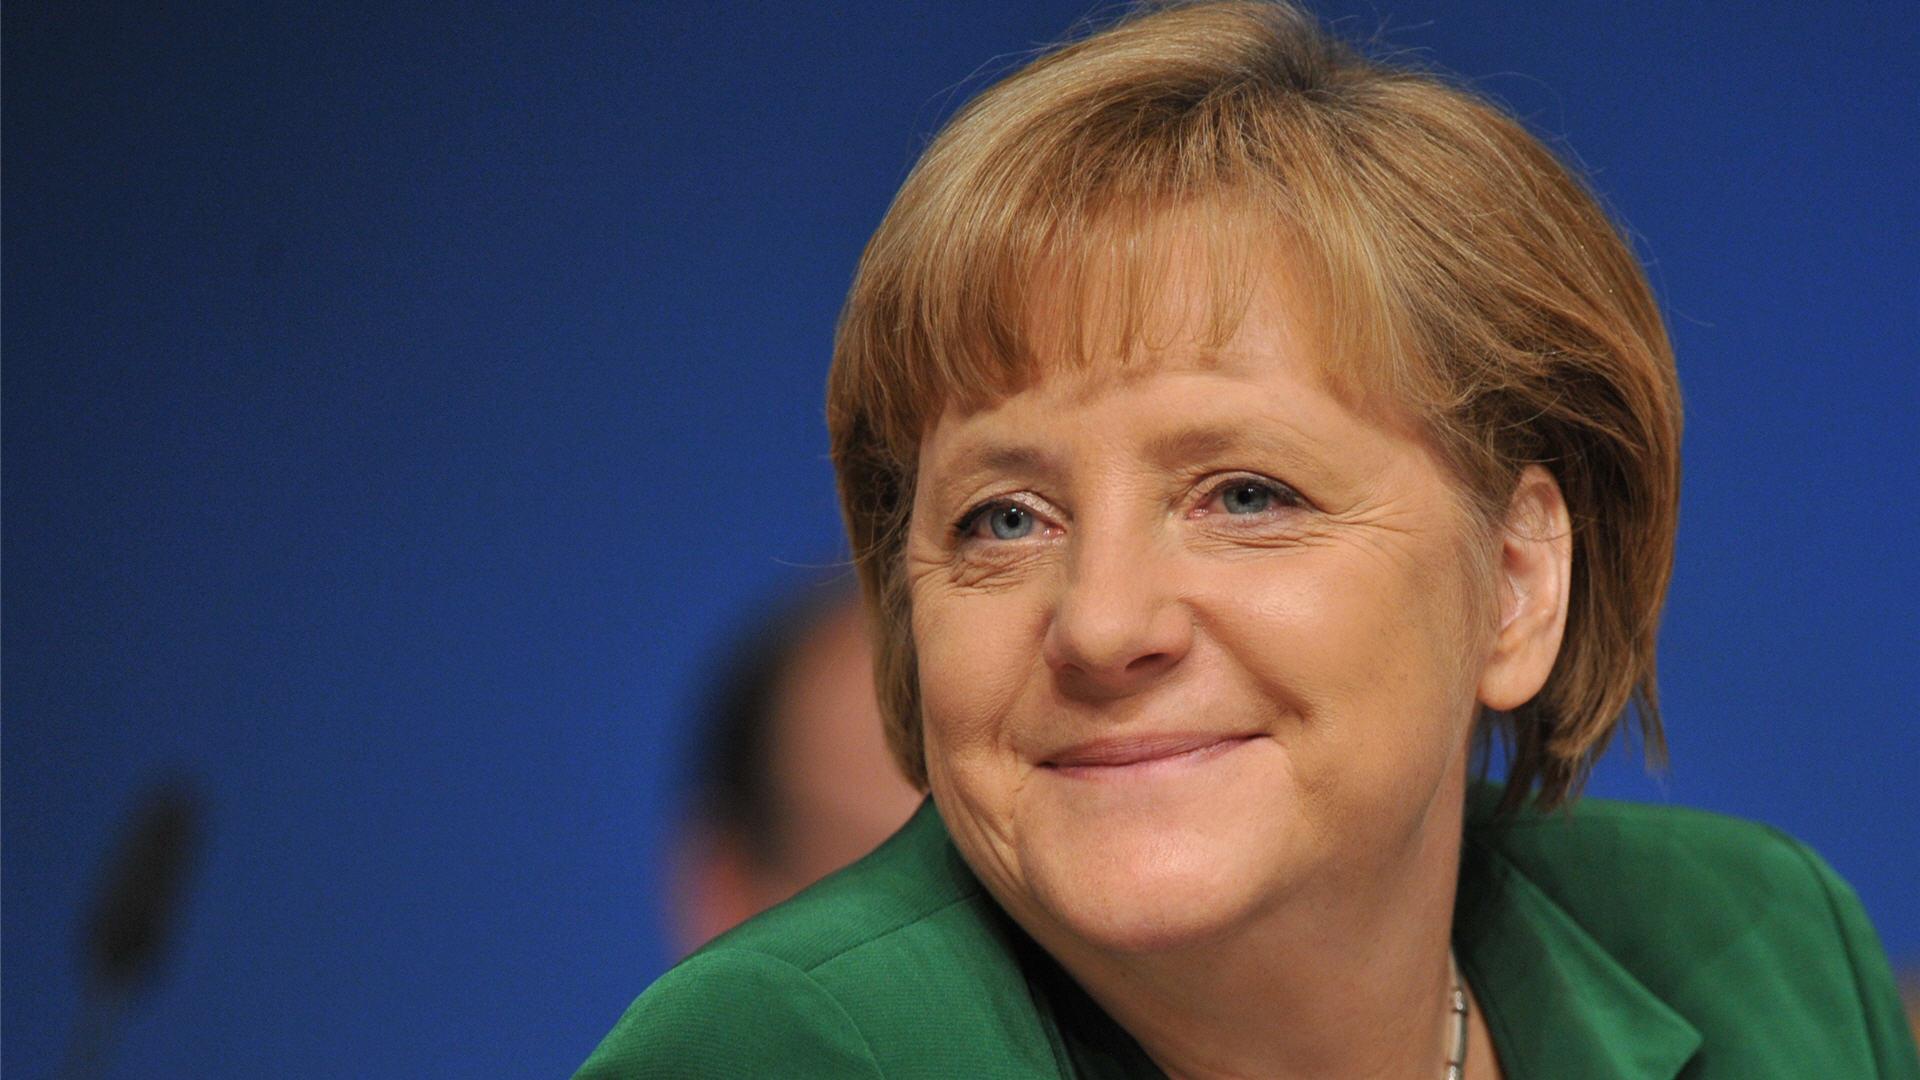 Angela Merkel Photo Wallpaper High Quality